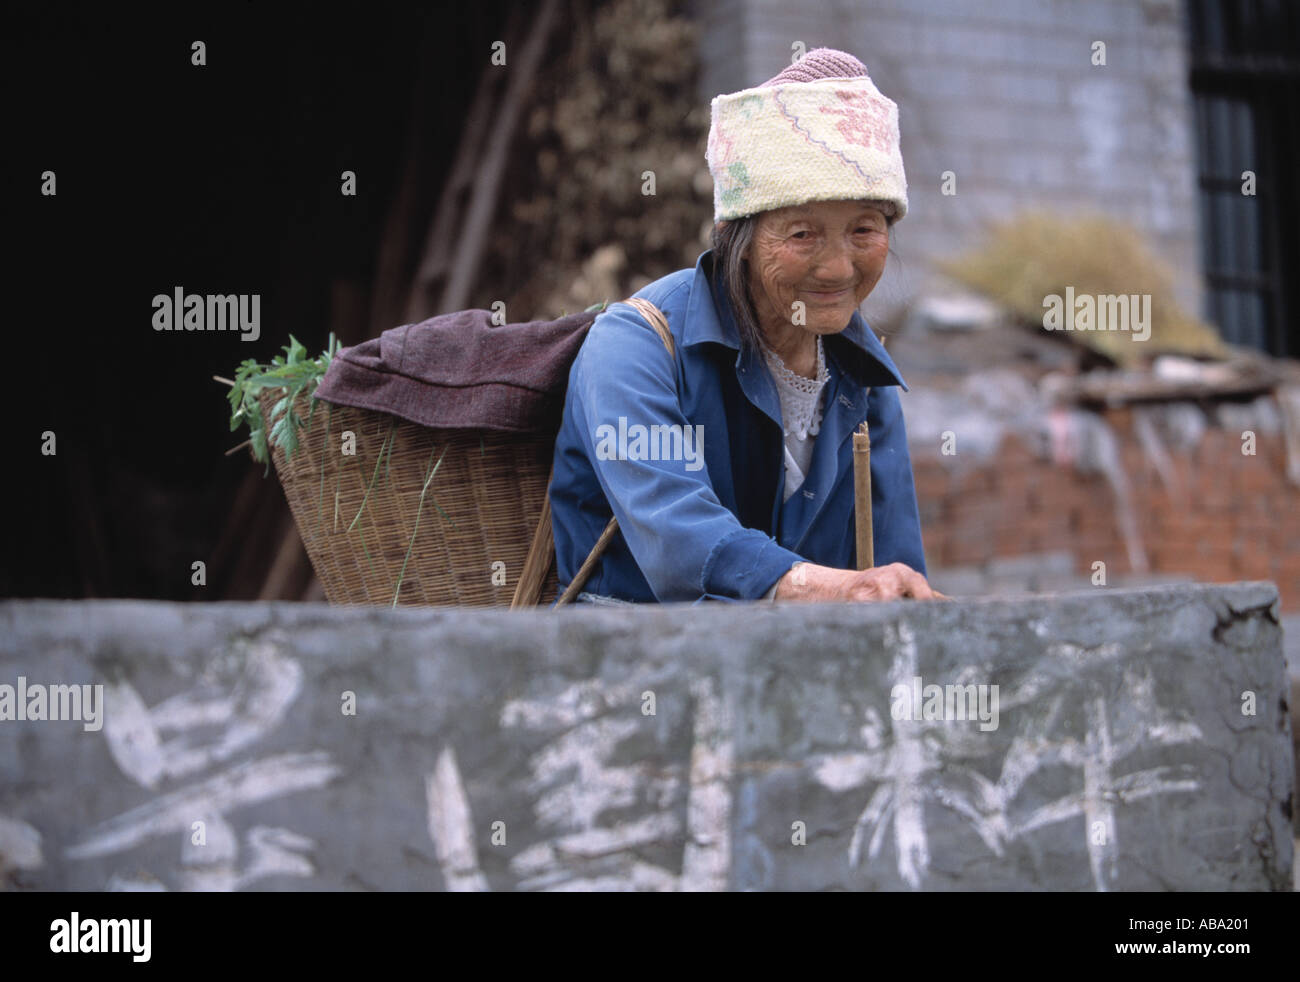 A Ba farmer carrying a basket stands behind a wall in rural China near Wanxian 042103 Stock Photo